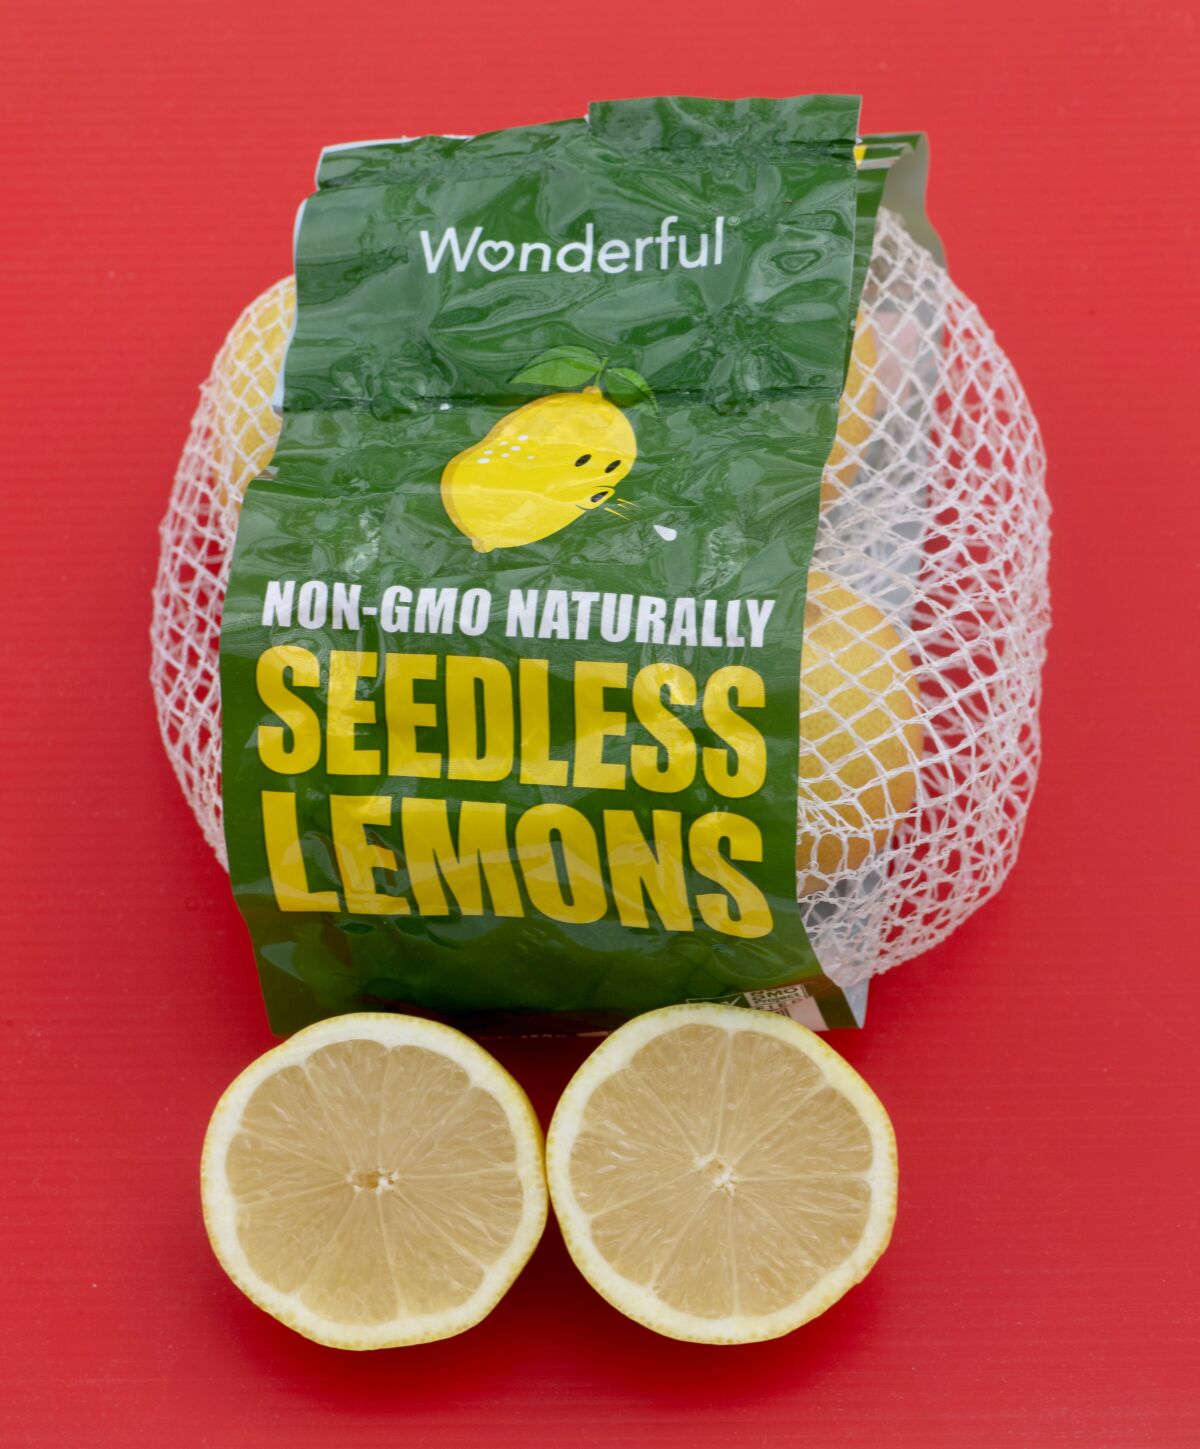 Wonderful Citrus seedless lemons